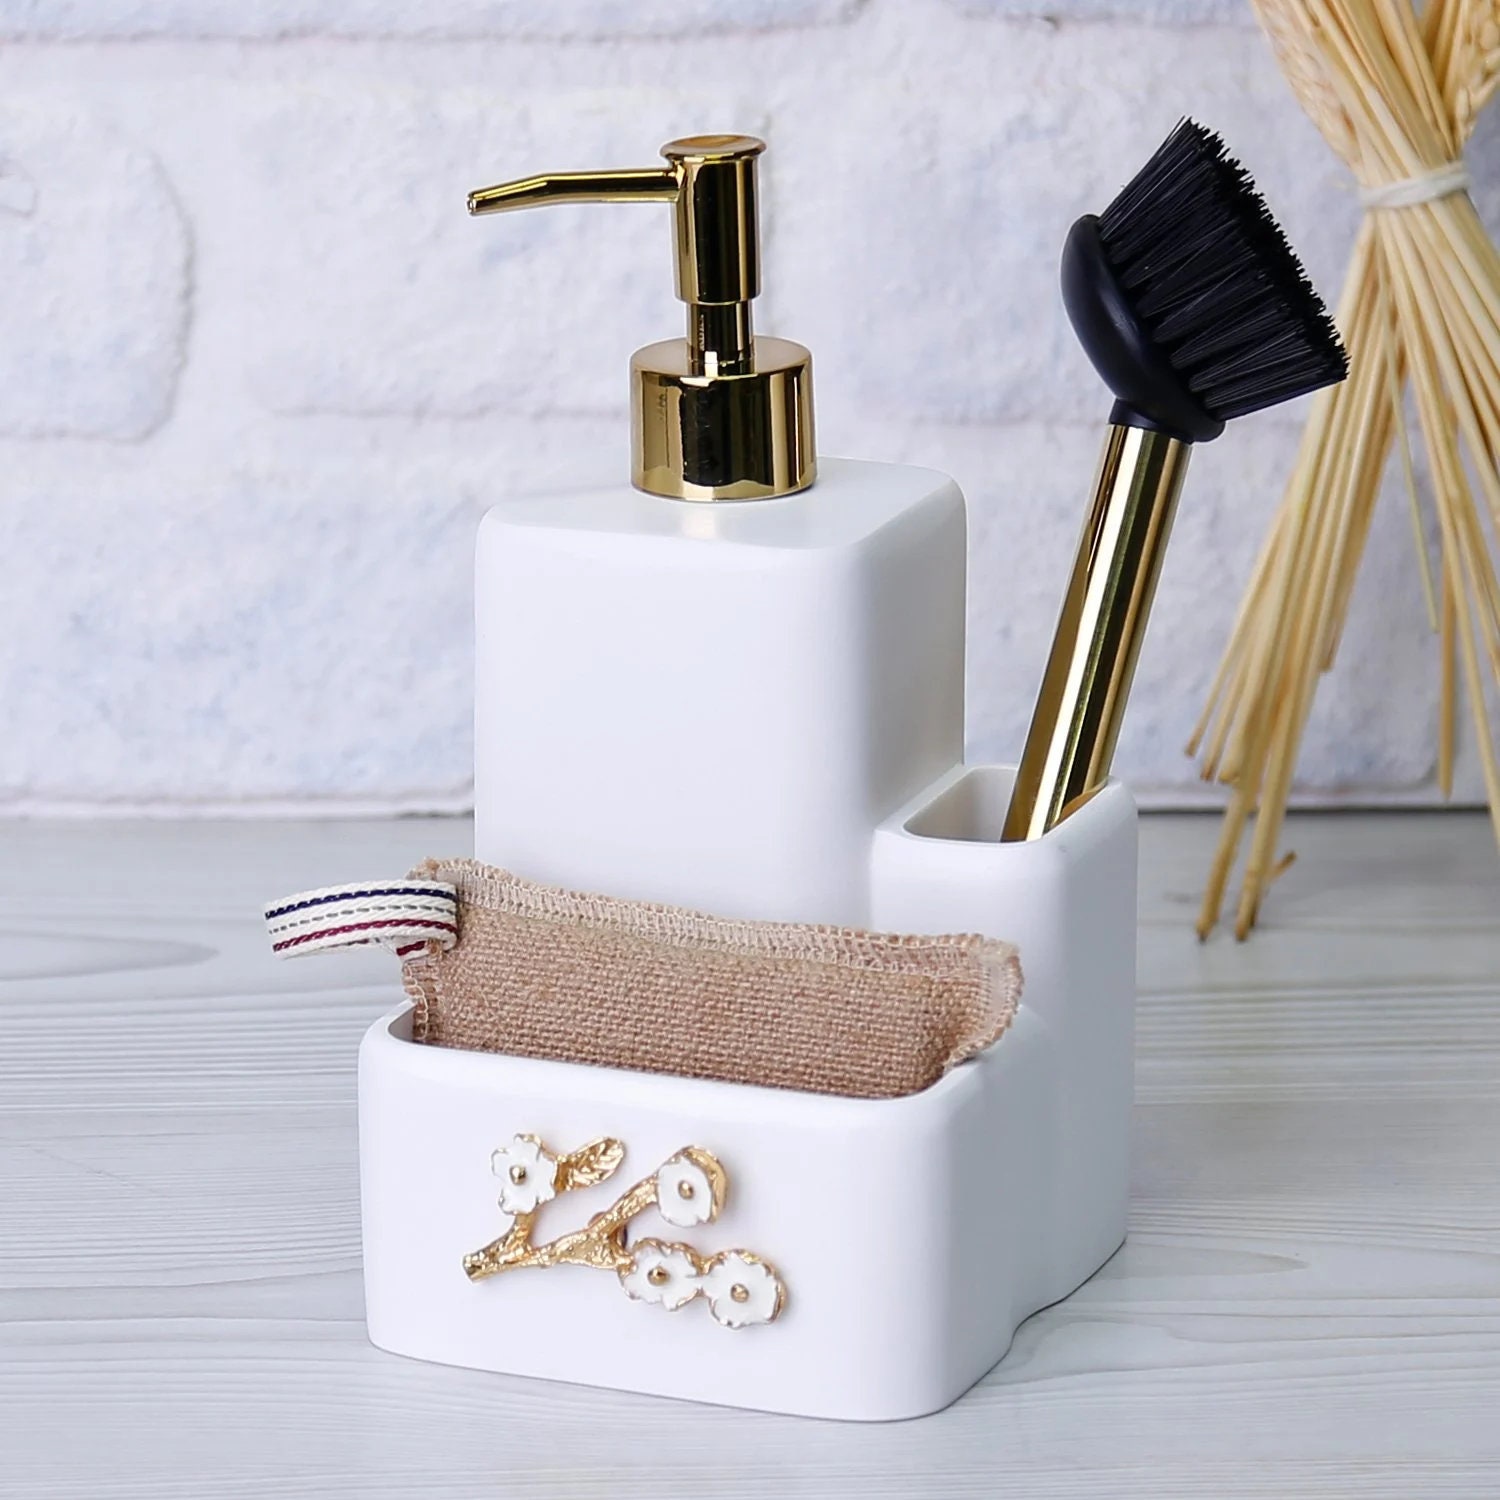 Ceramic Liquid Soap, Soap Dispenser With a Sponge Holder, Liquid Soap,  Kitchen Soap Pump, Handmade Kitchen Decor, Rustic Pottery, Moms Gift 